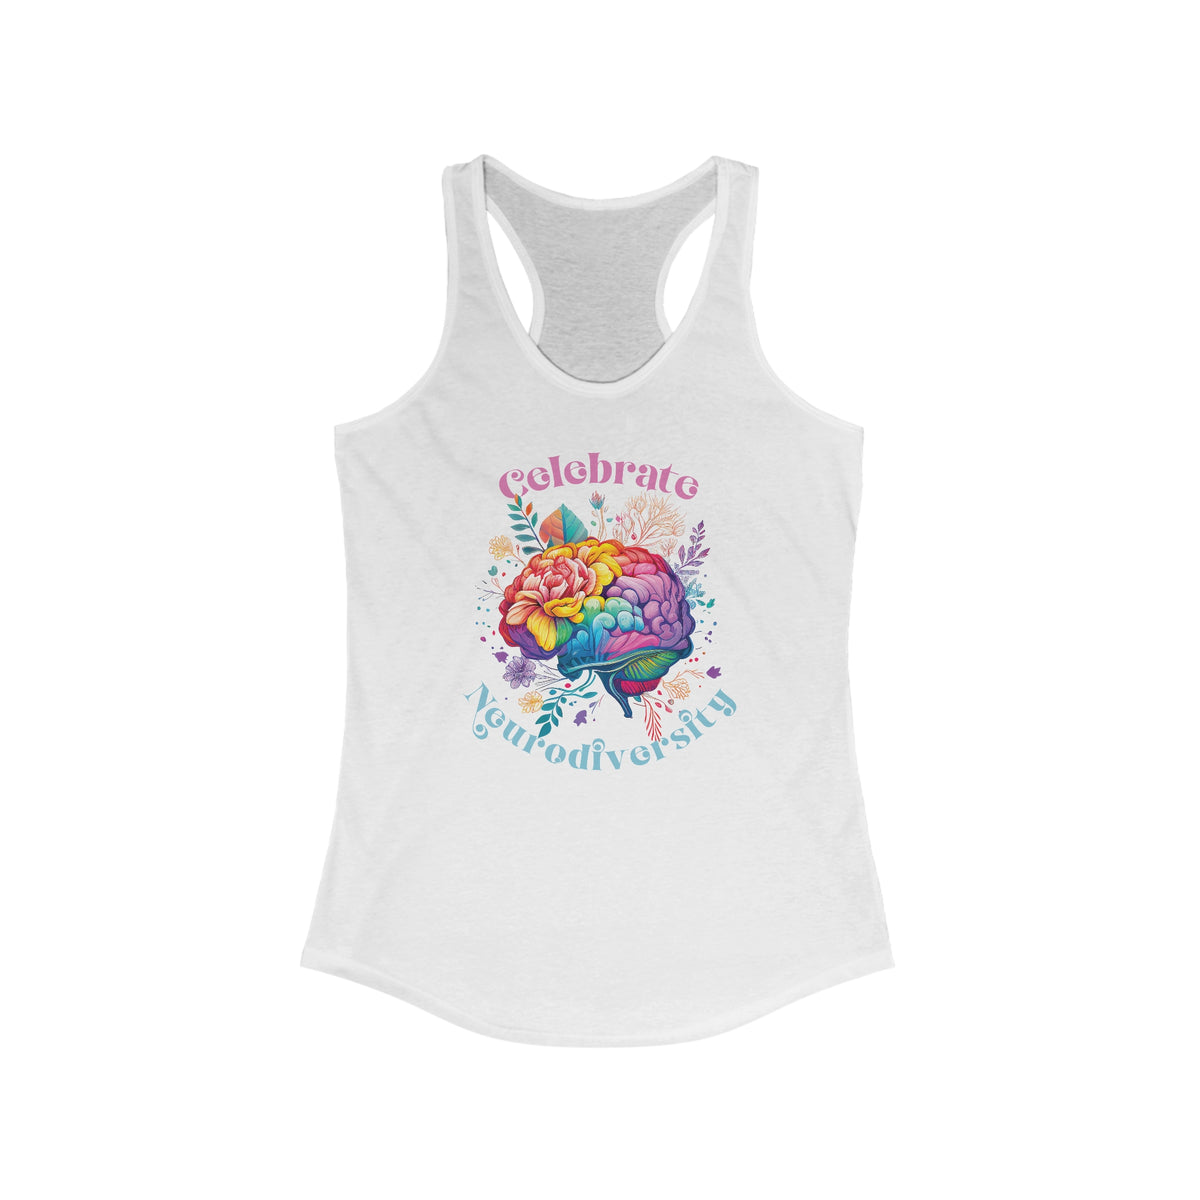 Celebrate Neurodiversity Shirt | Autism Shirt | Autism Awareness Shirt | Inclusion Shirt | Brain Art | Women's Slim Fit Racerback Tank Top